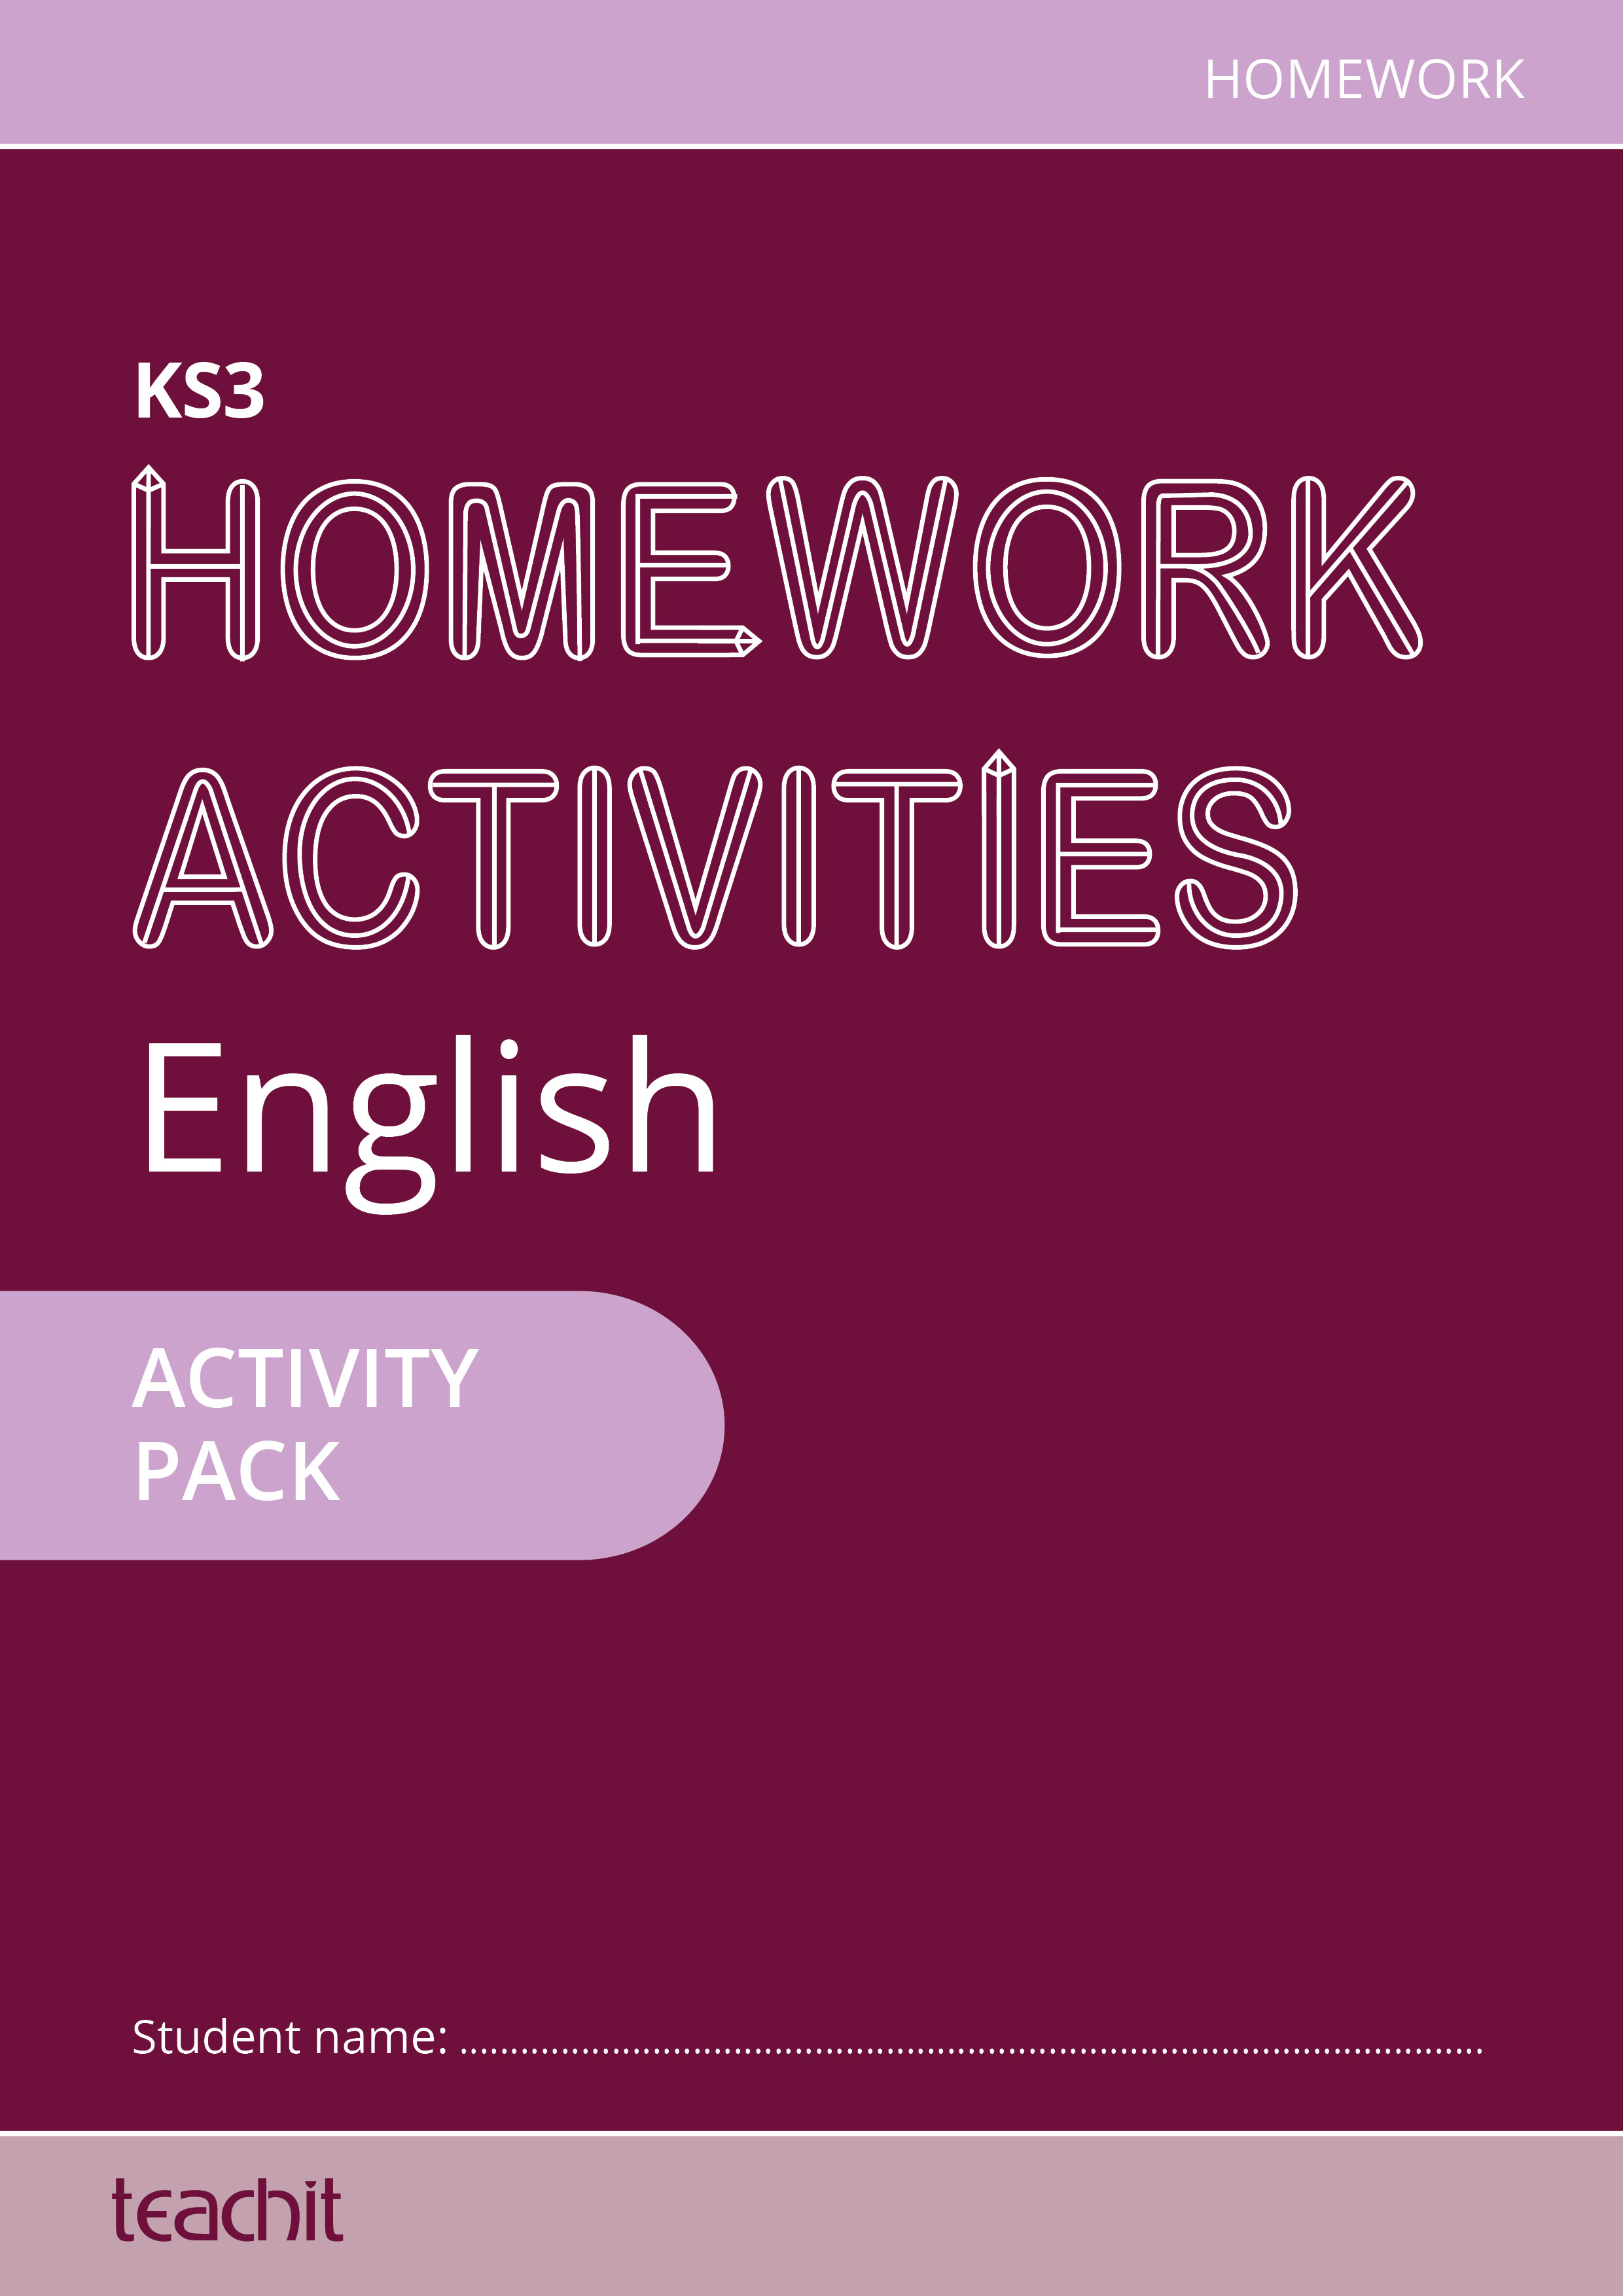 homework ideas ks3